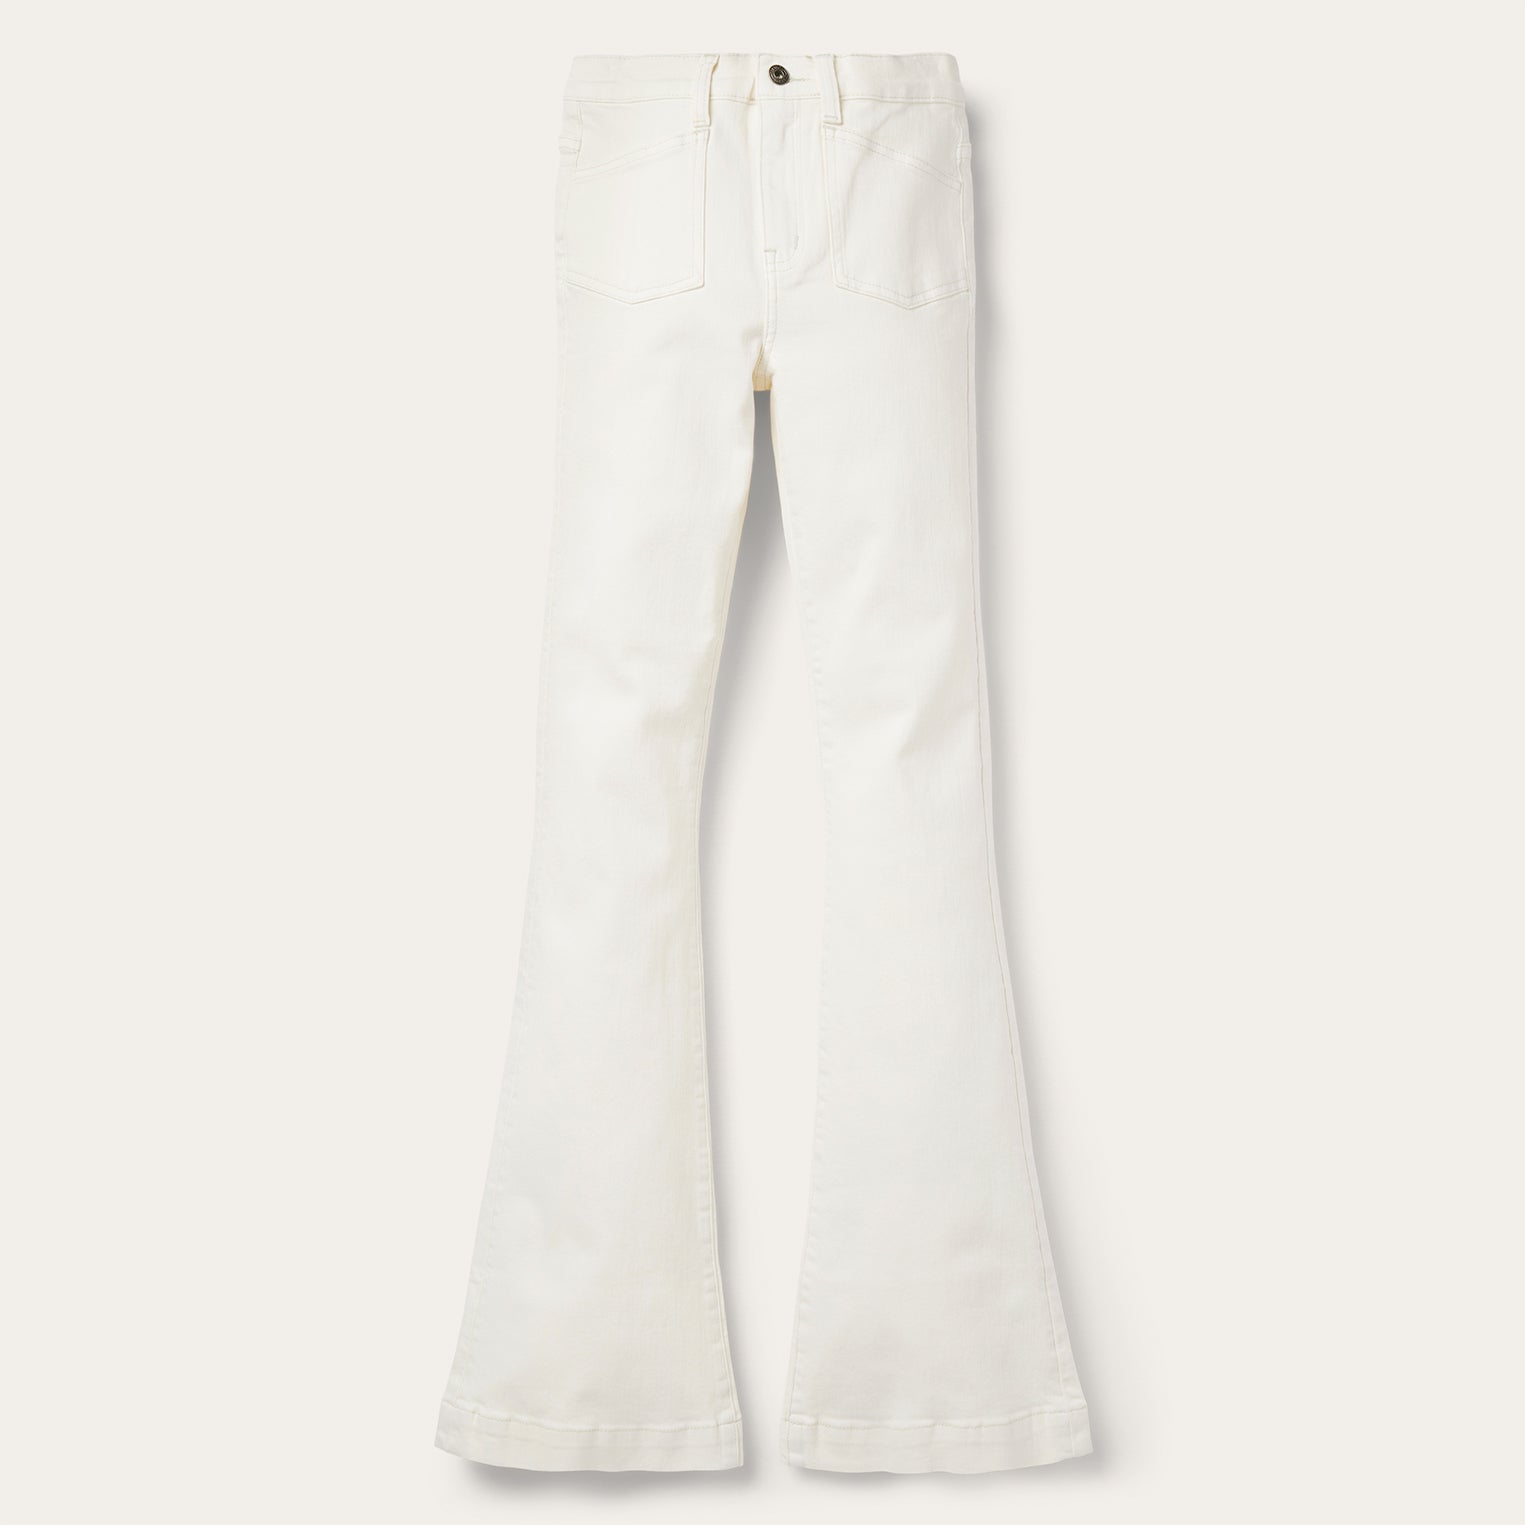 njshnmn High Waisted Flare Jeans for Women Slim Fit High Waist Flared Bell  Bottom Wide Leg Denim Jeans Pants - Walmart.com